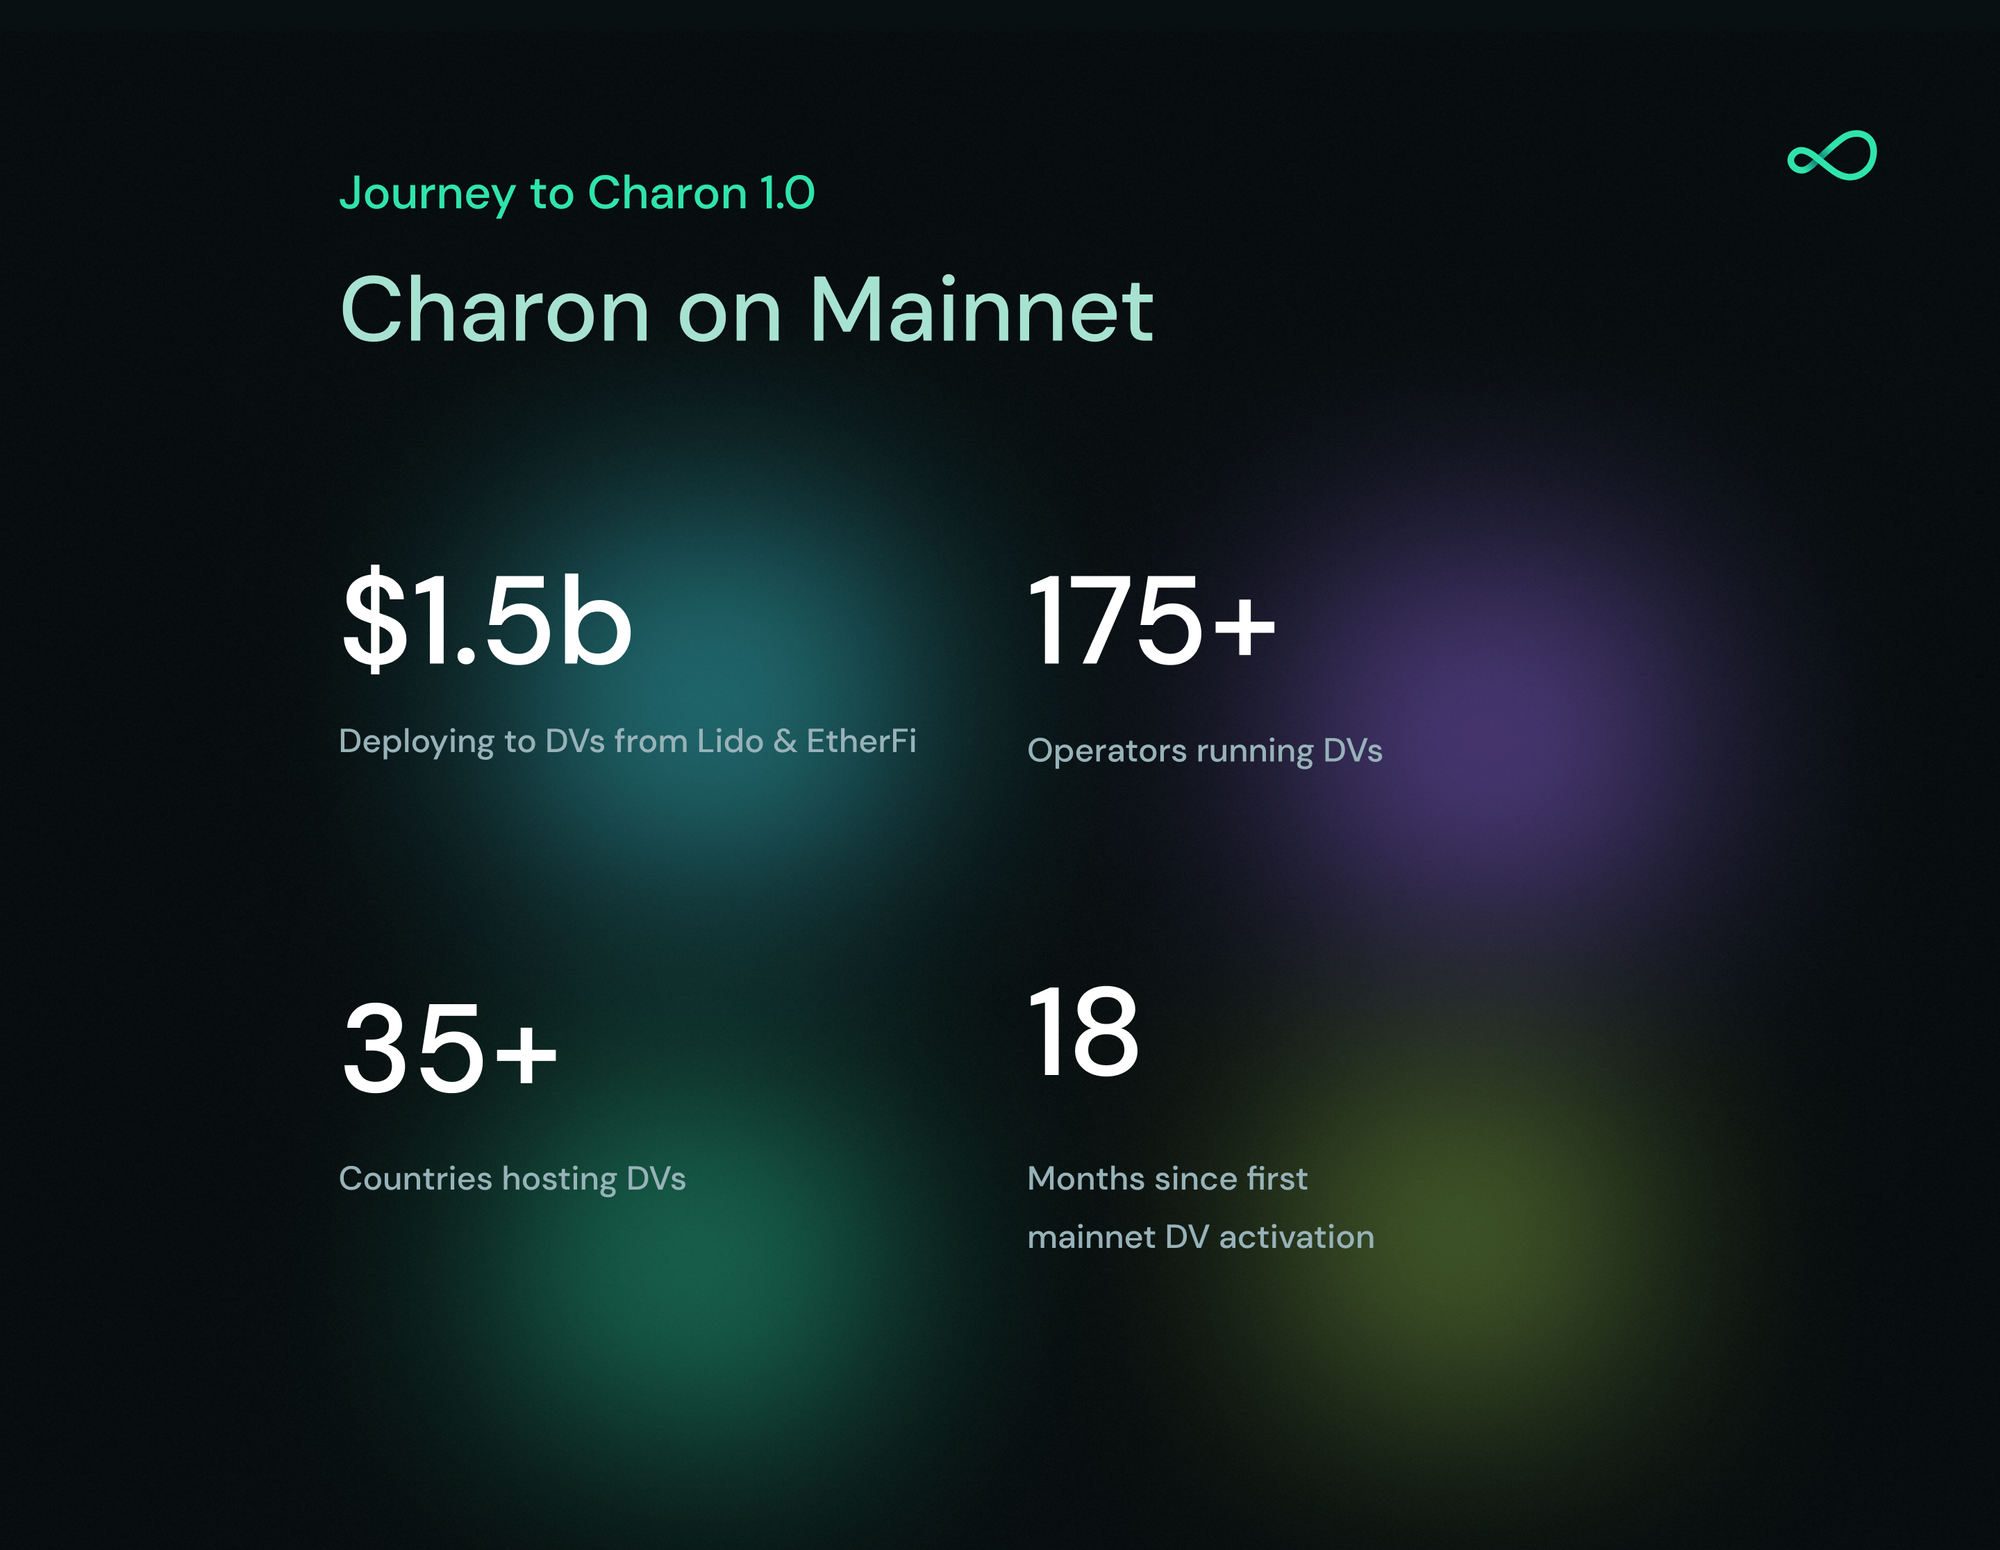 Releasing Charon 1.0